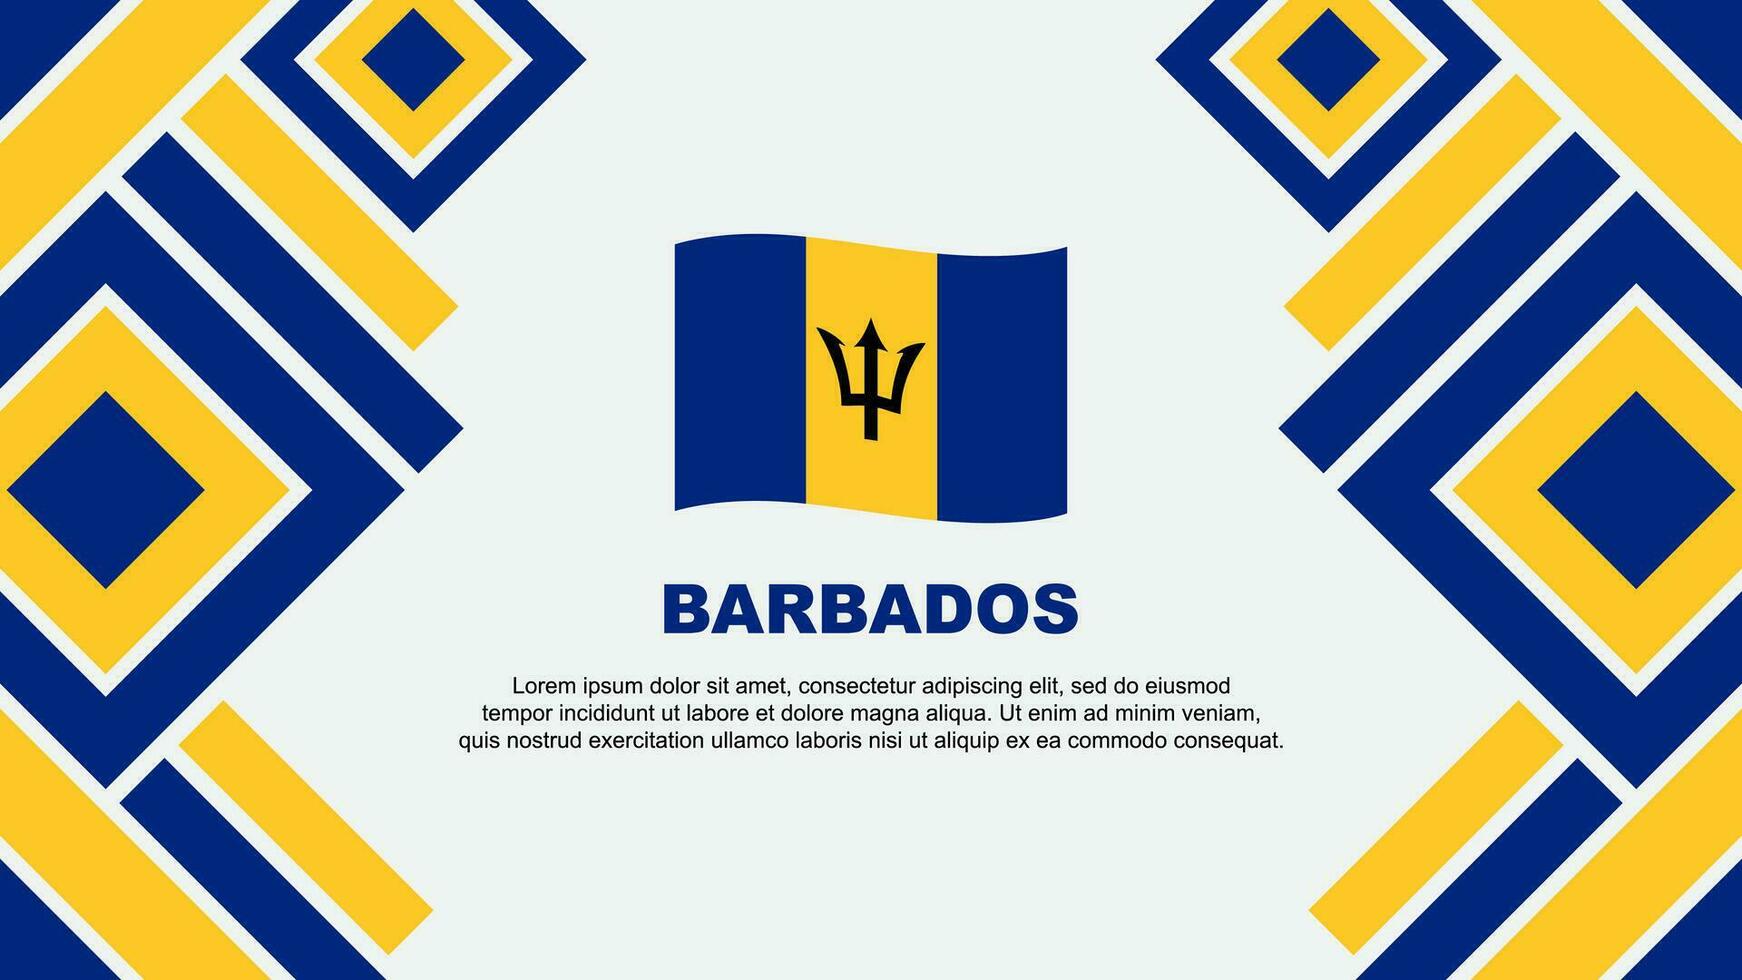 Barbados Flag Abstract Background Design Template. Barbados Independence Day Banner Wallpaper Vector Illustration. Barbados